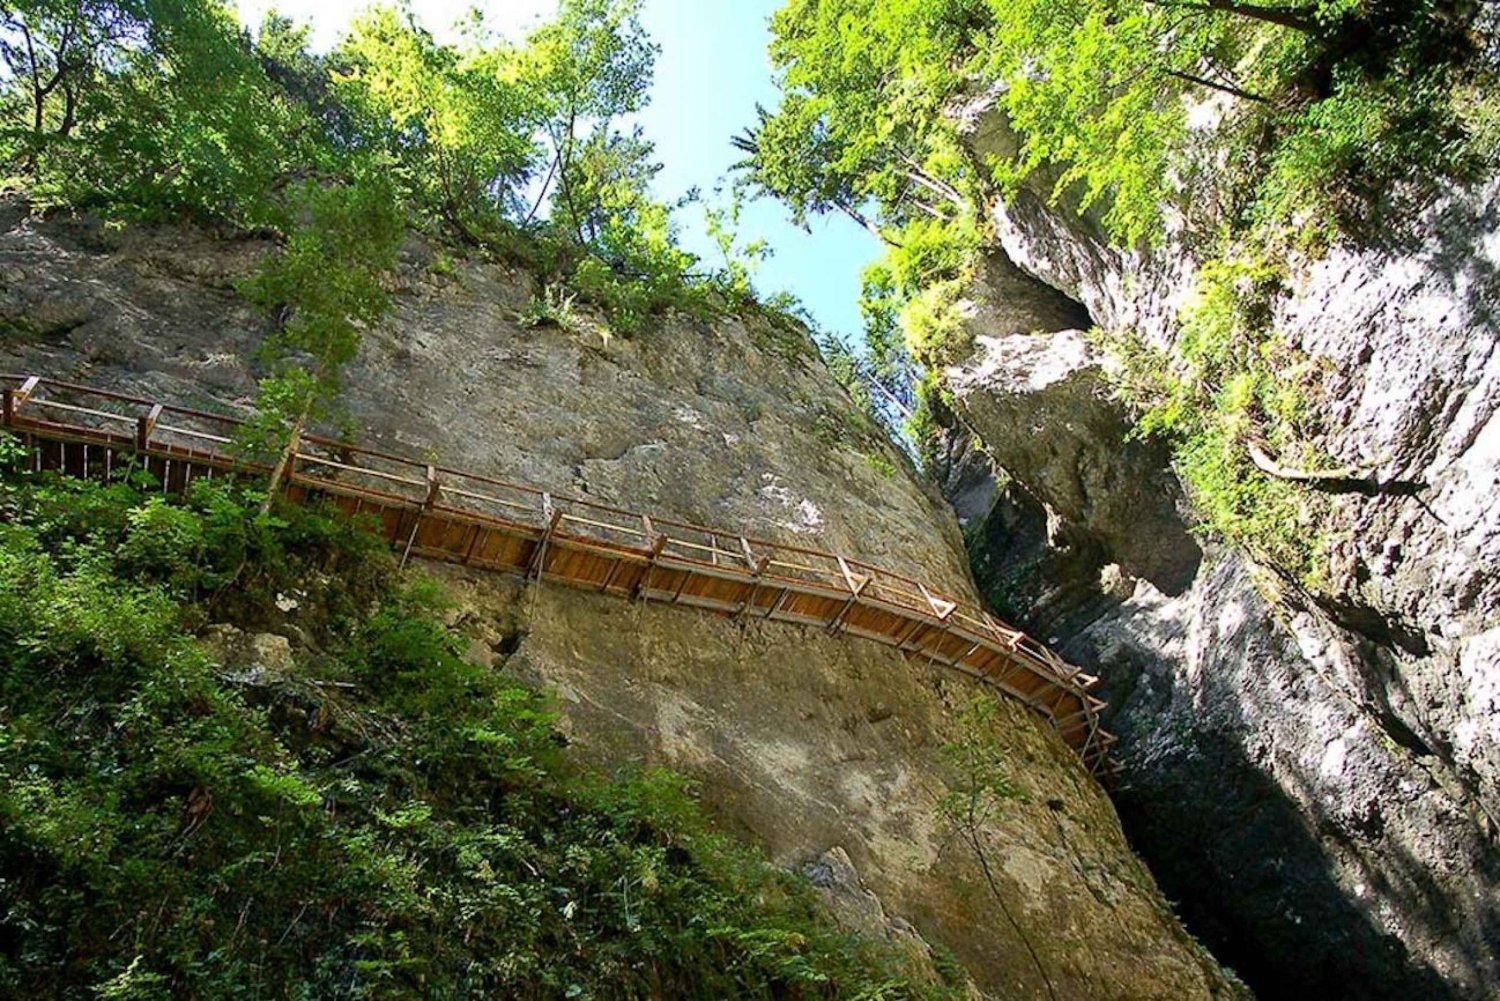 Van Bled: Pokljuka Gorge Trail-wandeling van een halve dag